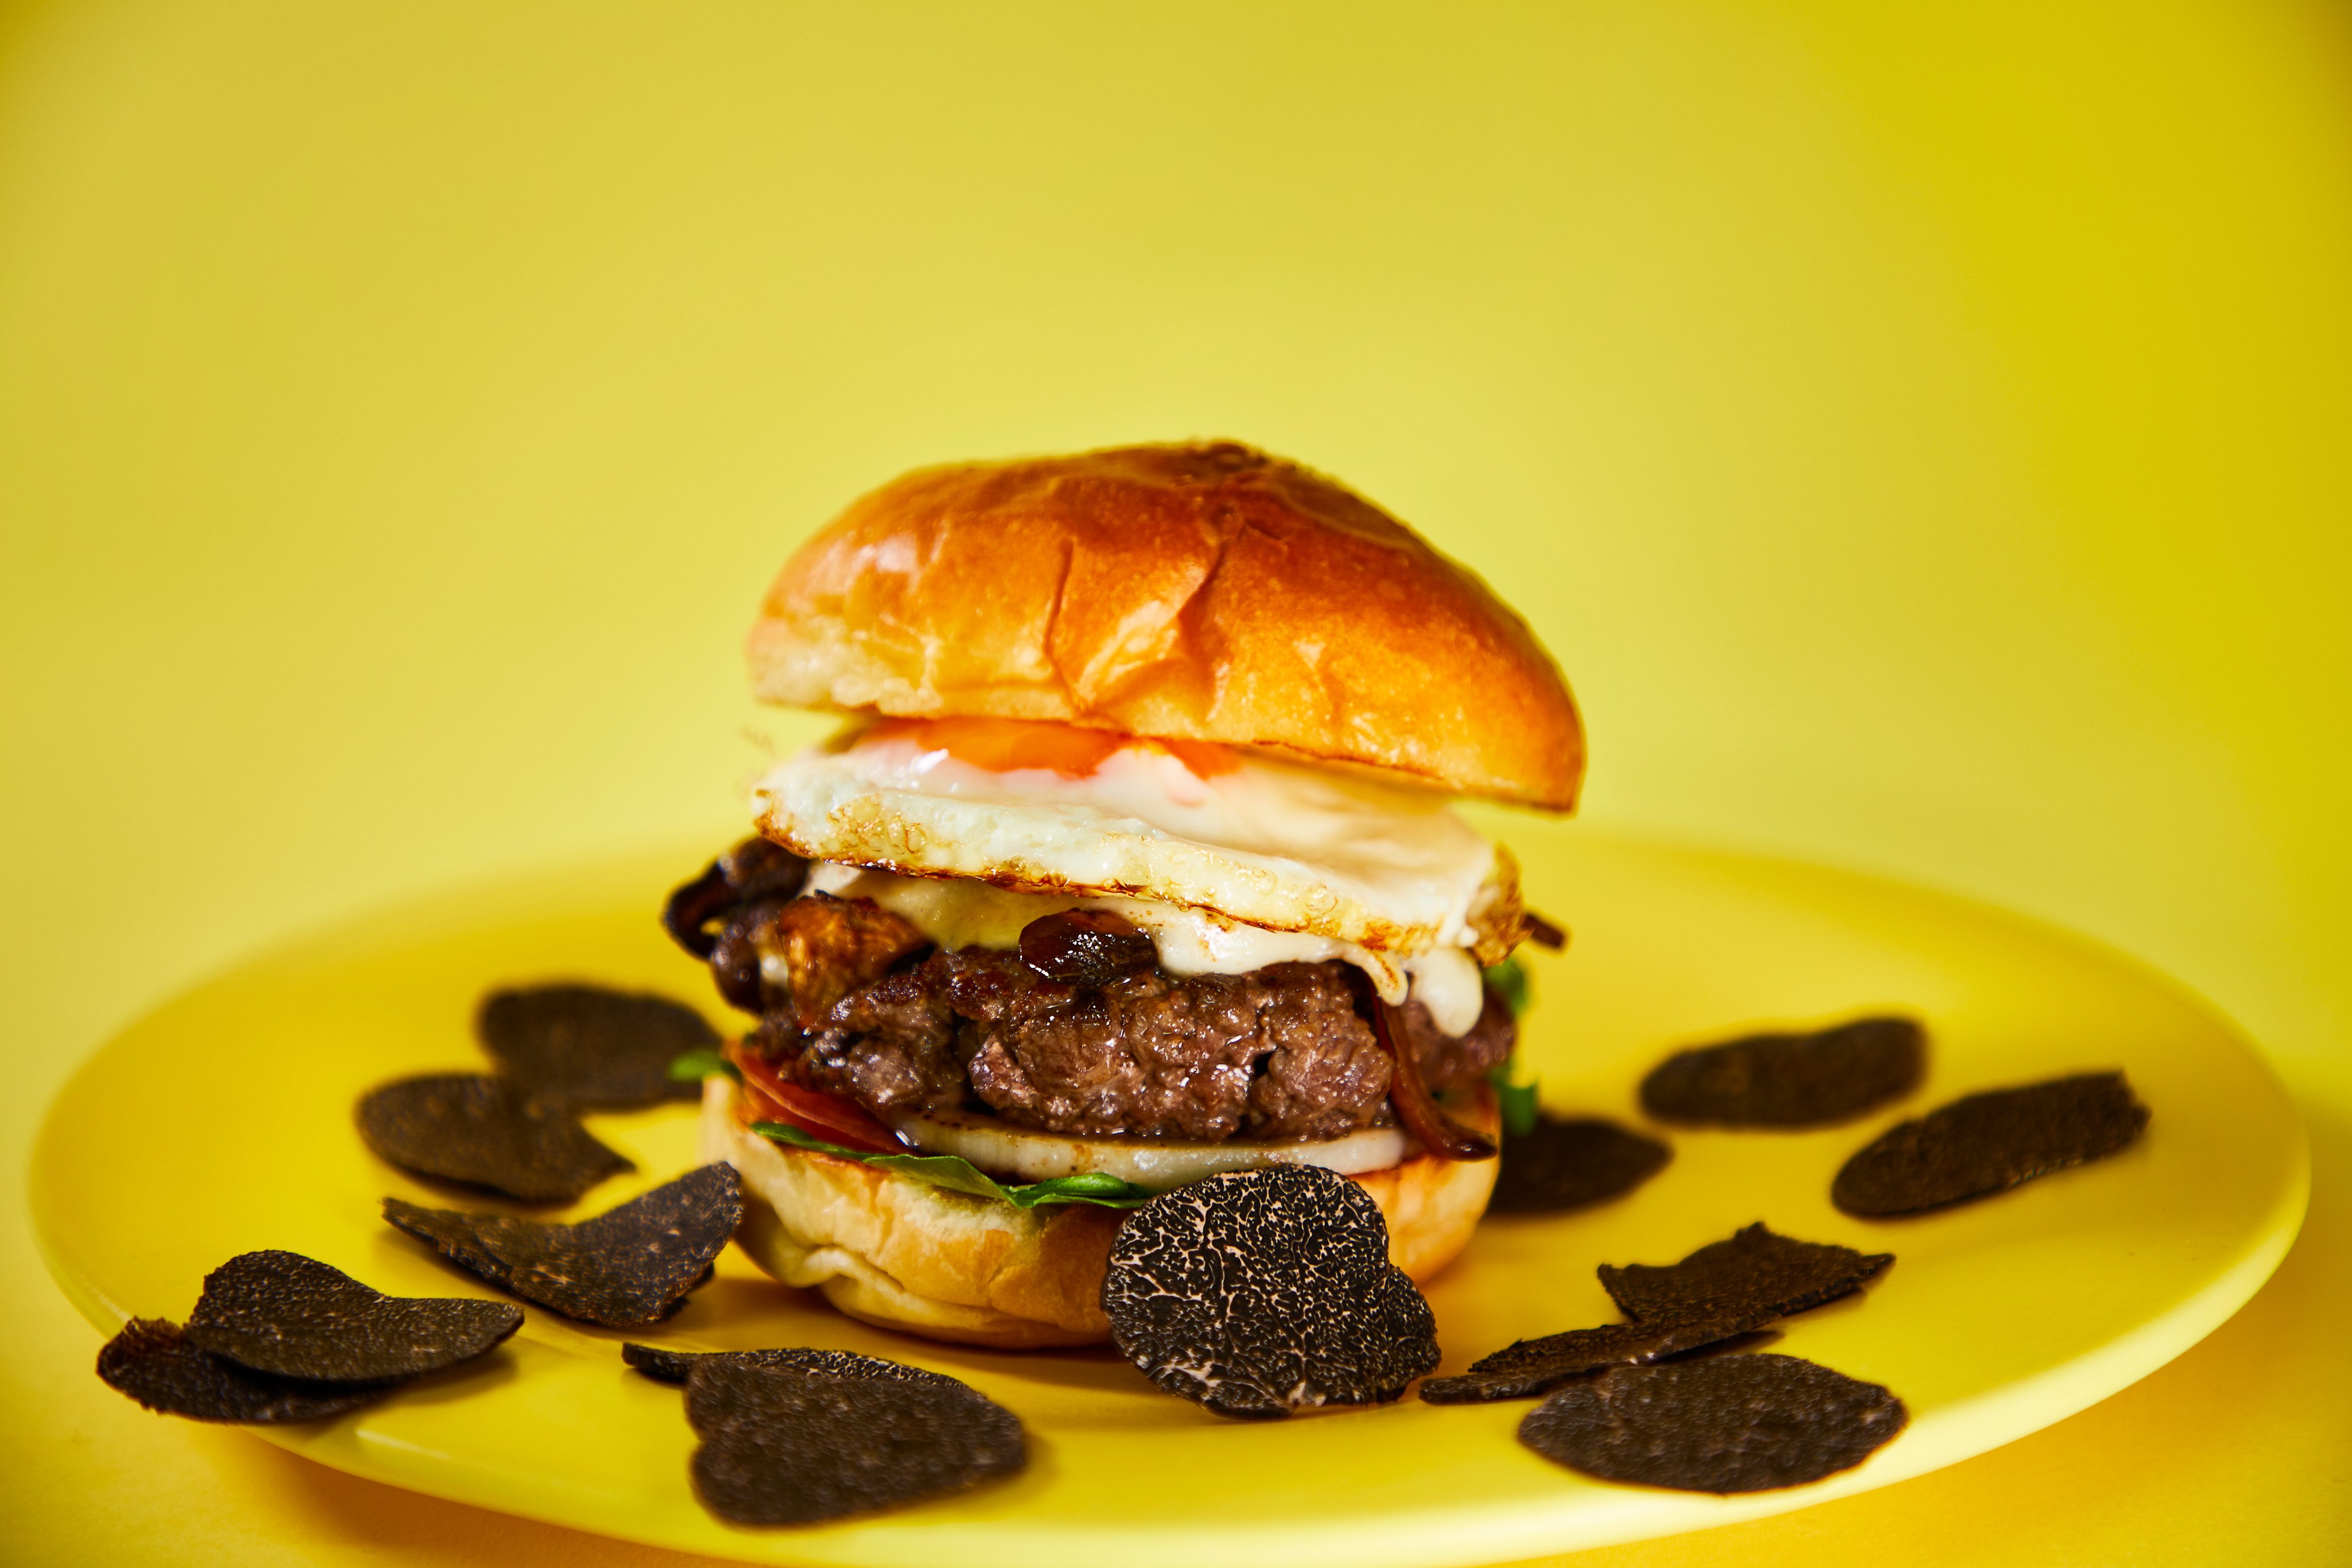 Genkai Burger トリュフ香る 神戸牛 Genkai チーズバーガー は 理想の5味 1を提供するため 全ての食材に対してあらゆる産地から厳選した食材を使用しています 選び抜かれたプレミアムな食材を画像にてご紹介 レコールバンタン Vantan 限界